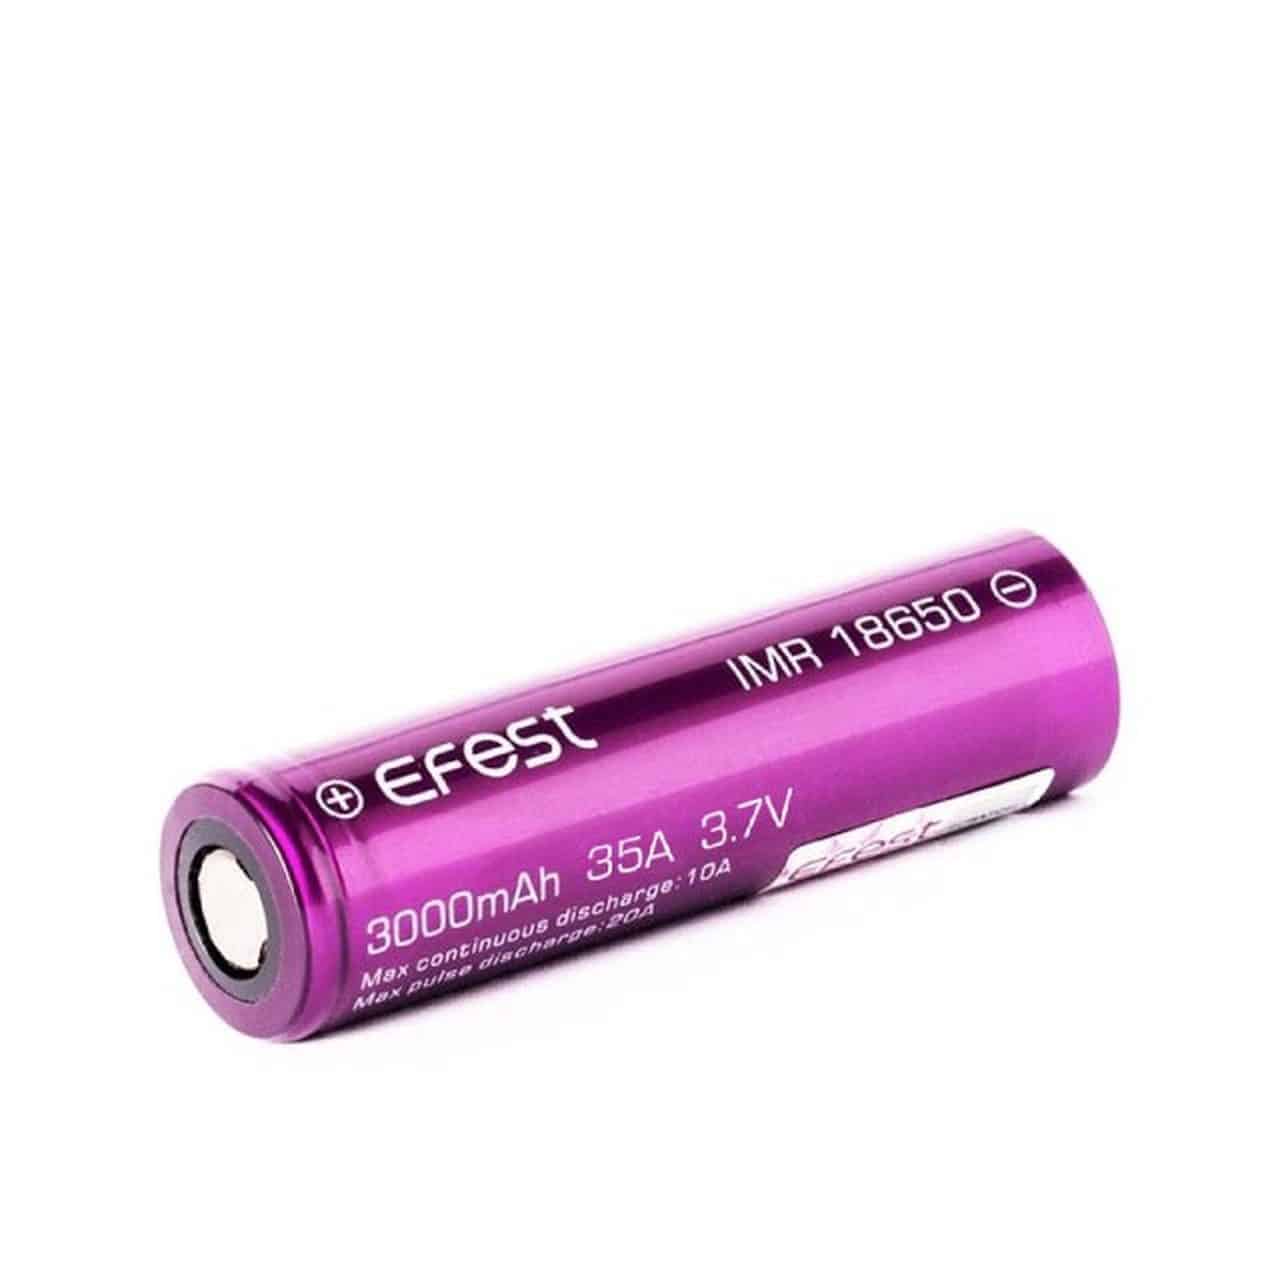 Efest IMR 18650 3000mAh 35A Battery